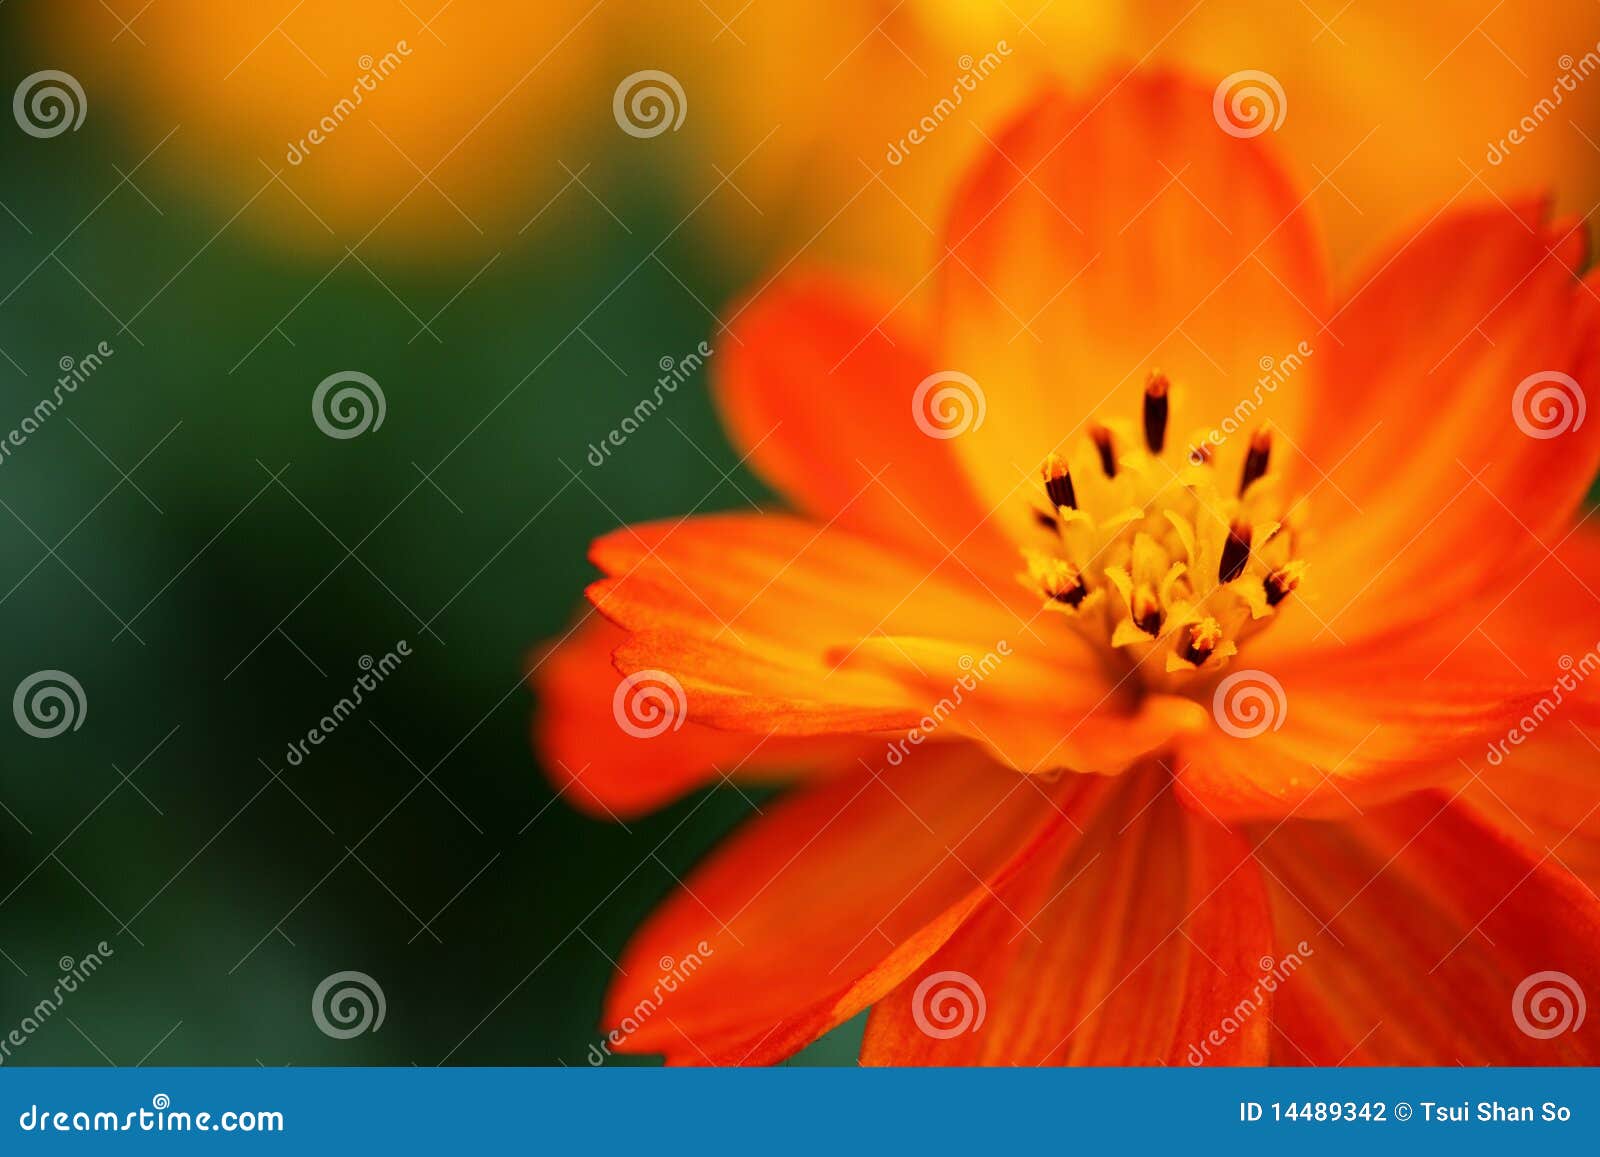 Little orange flower stock photo. Image of grass, green - 14489342